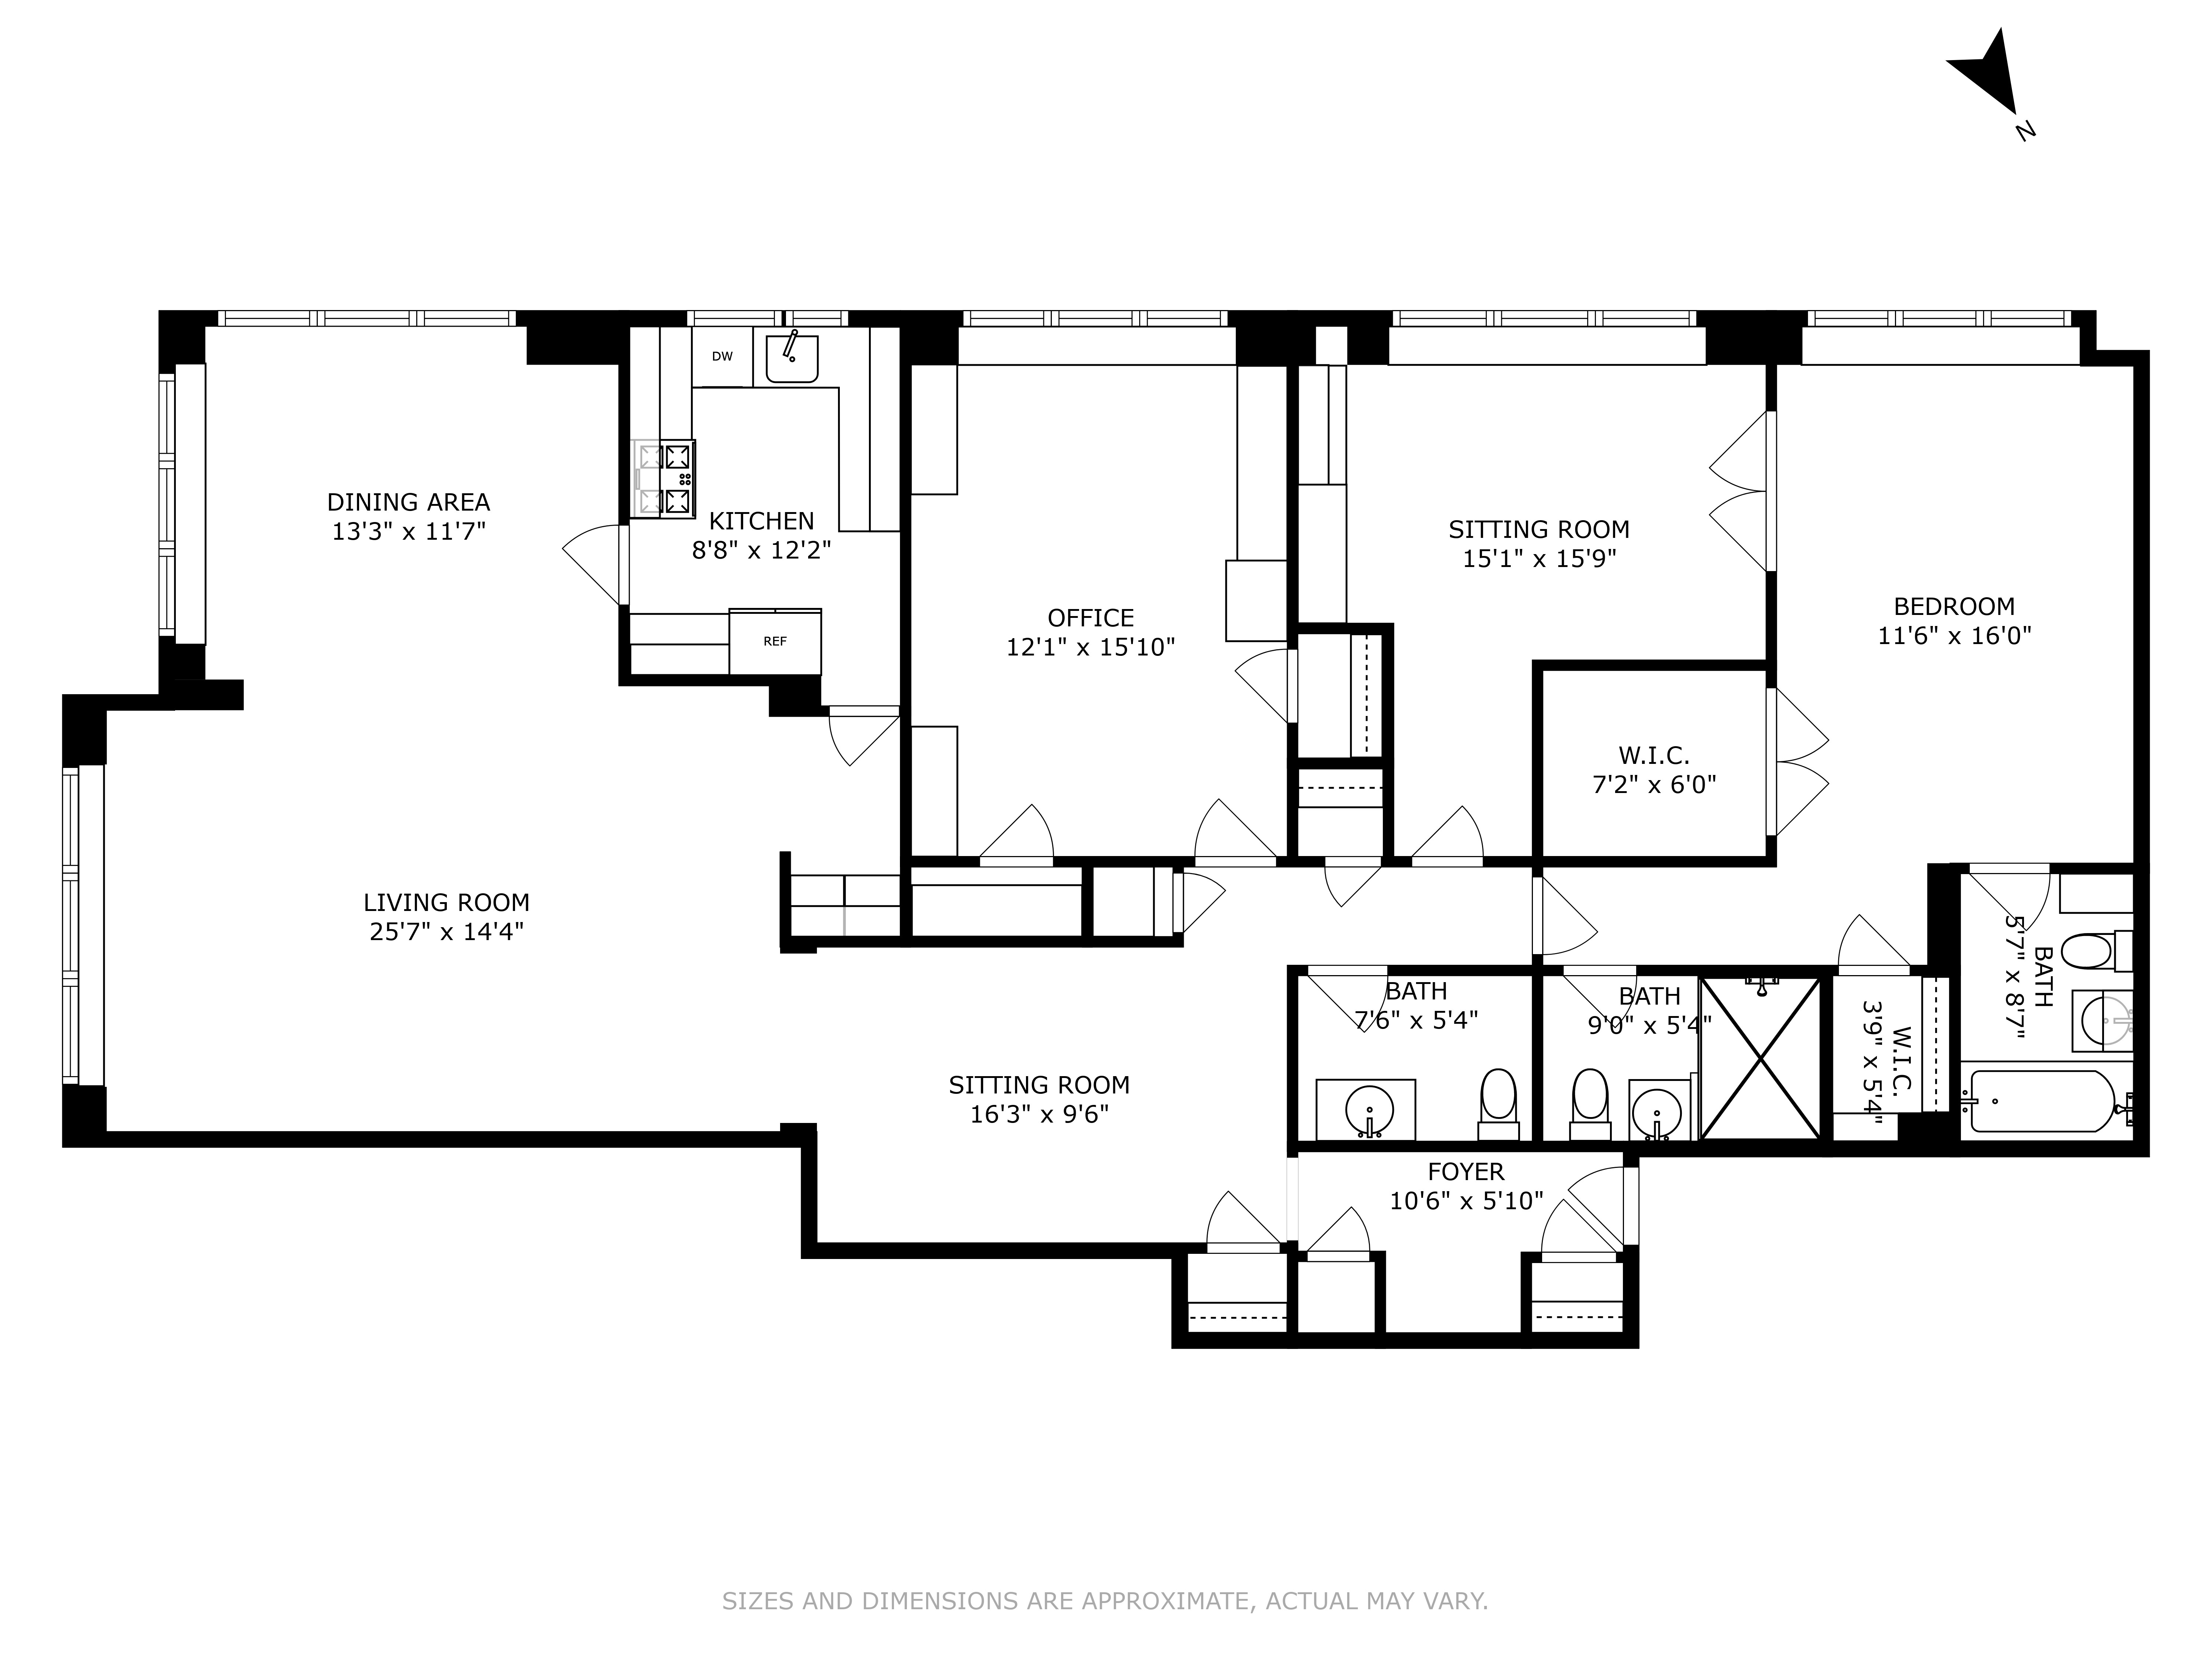 Floorplan for 45 Sutton Place, 14F